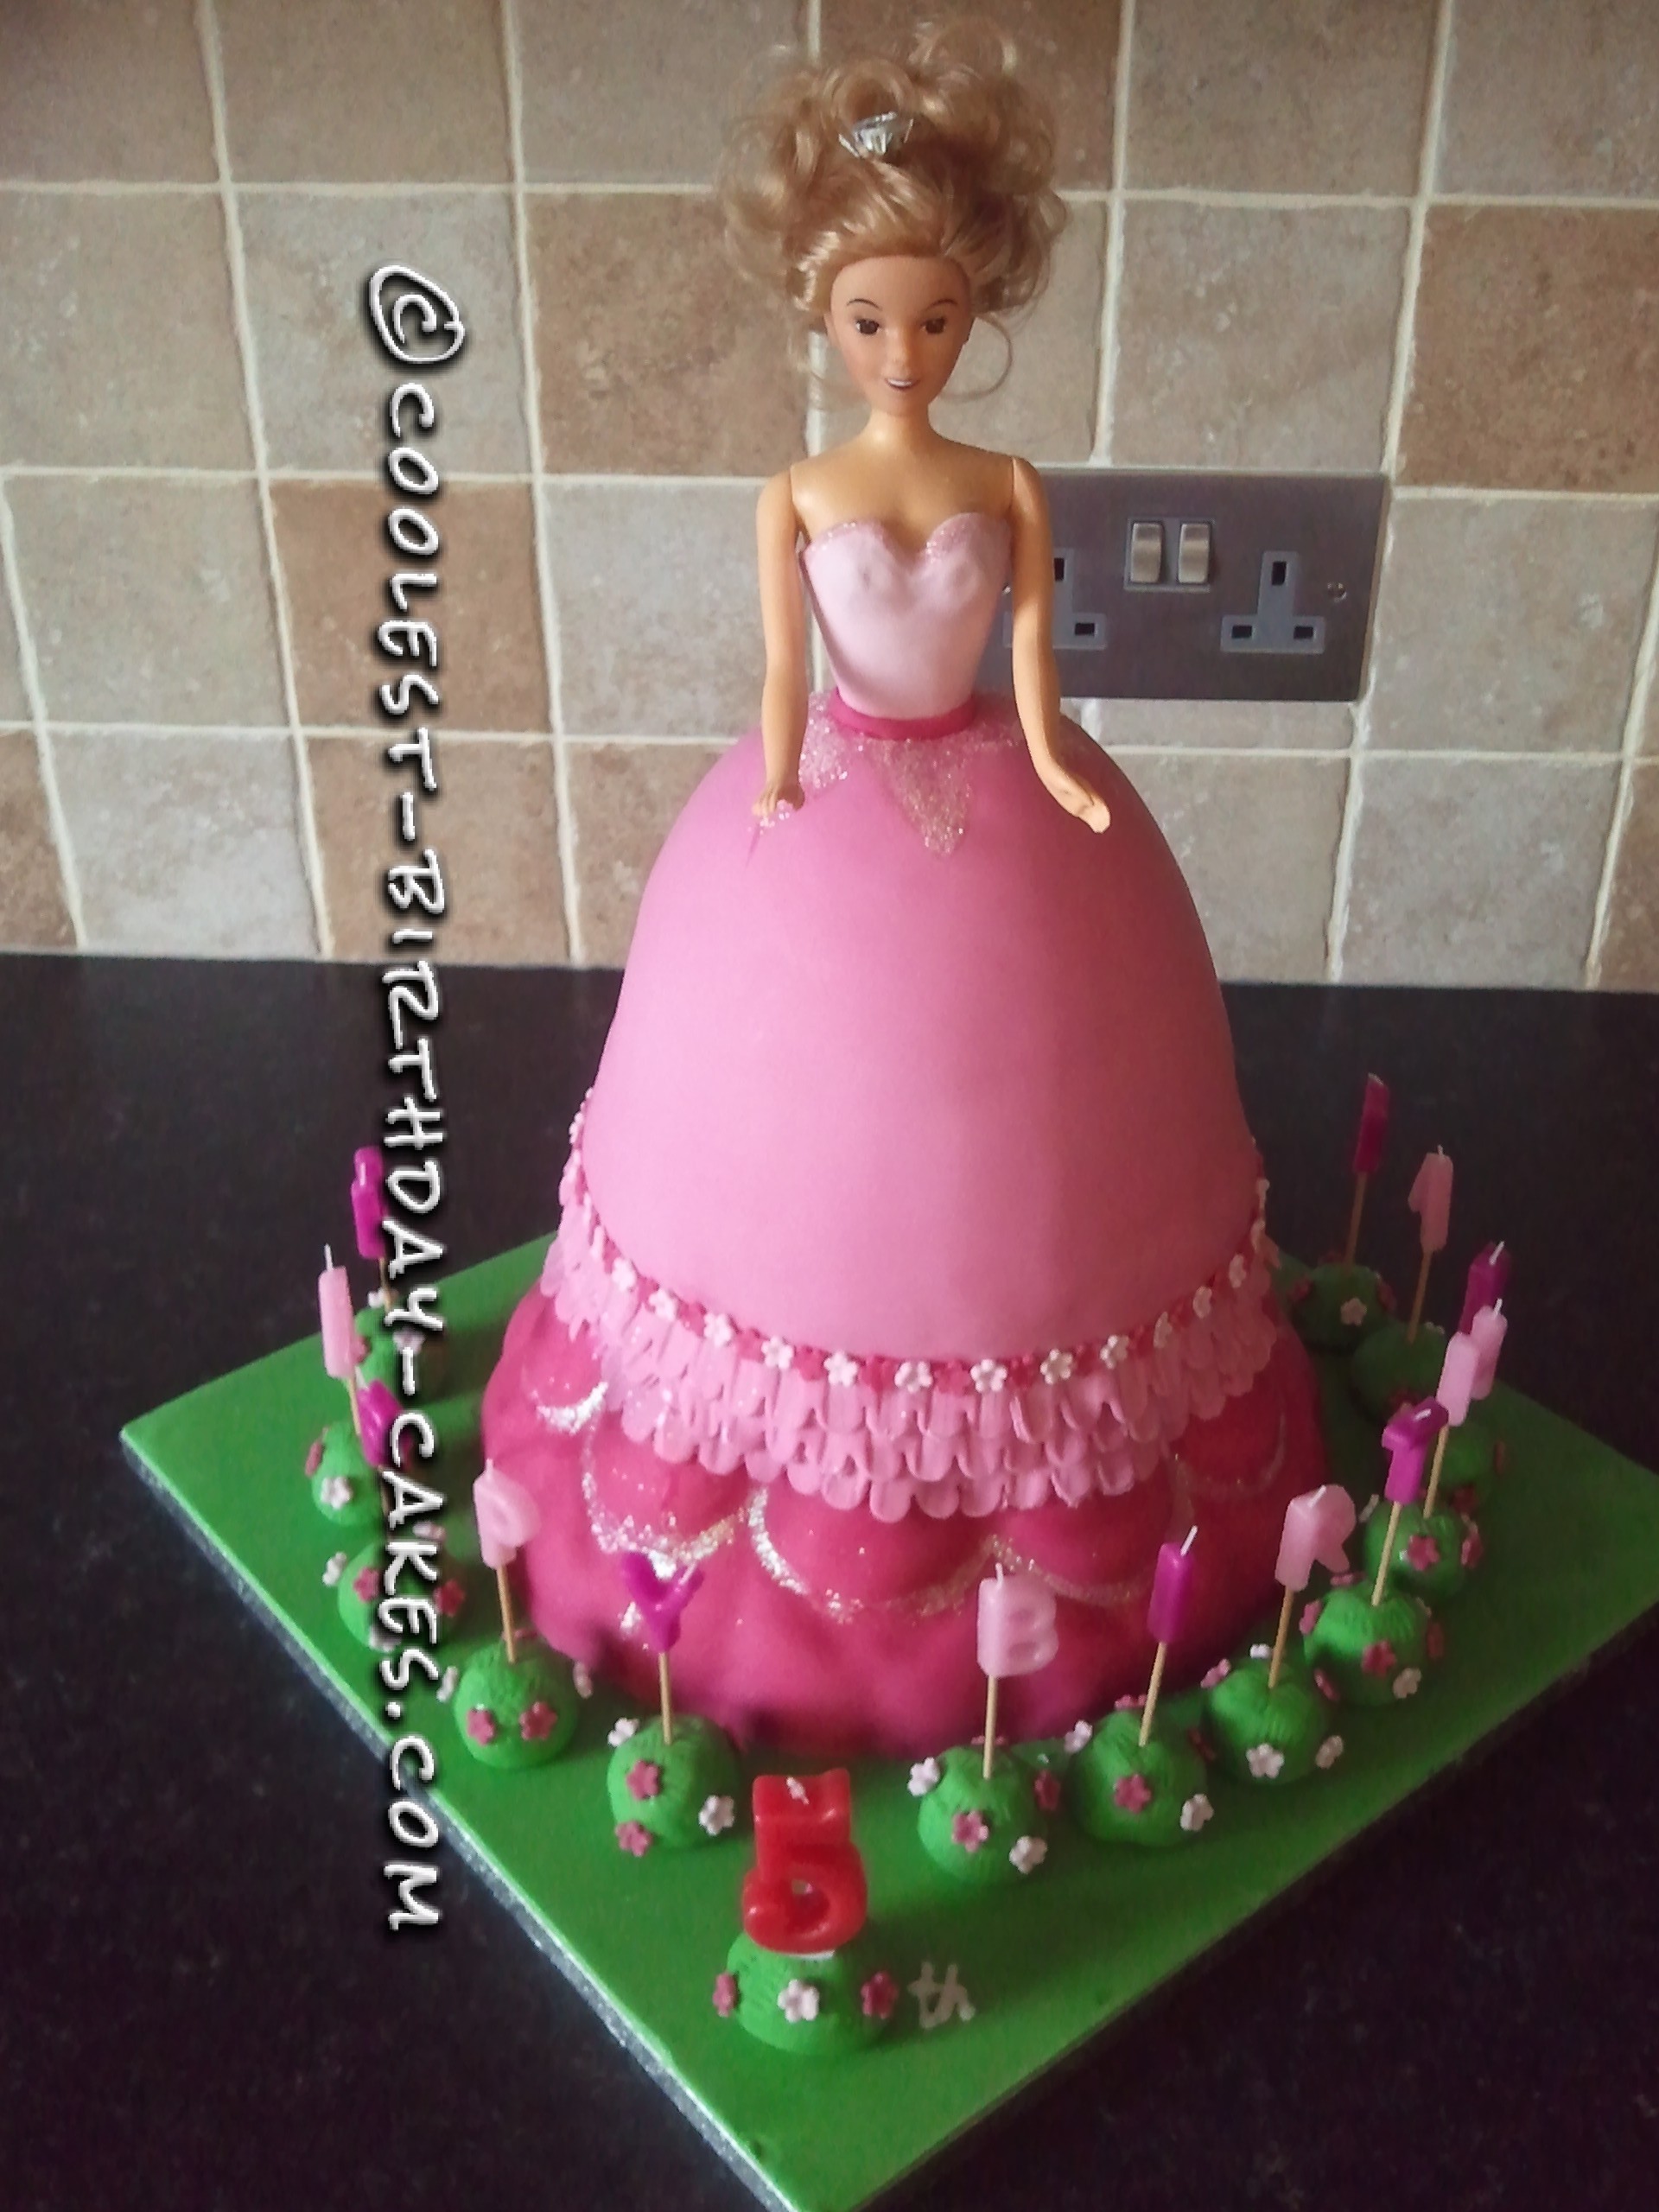 Coolest Princess Birthday Cake